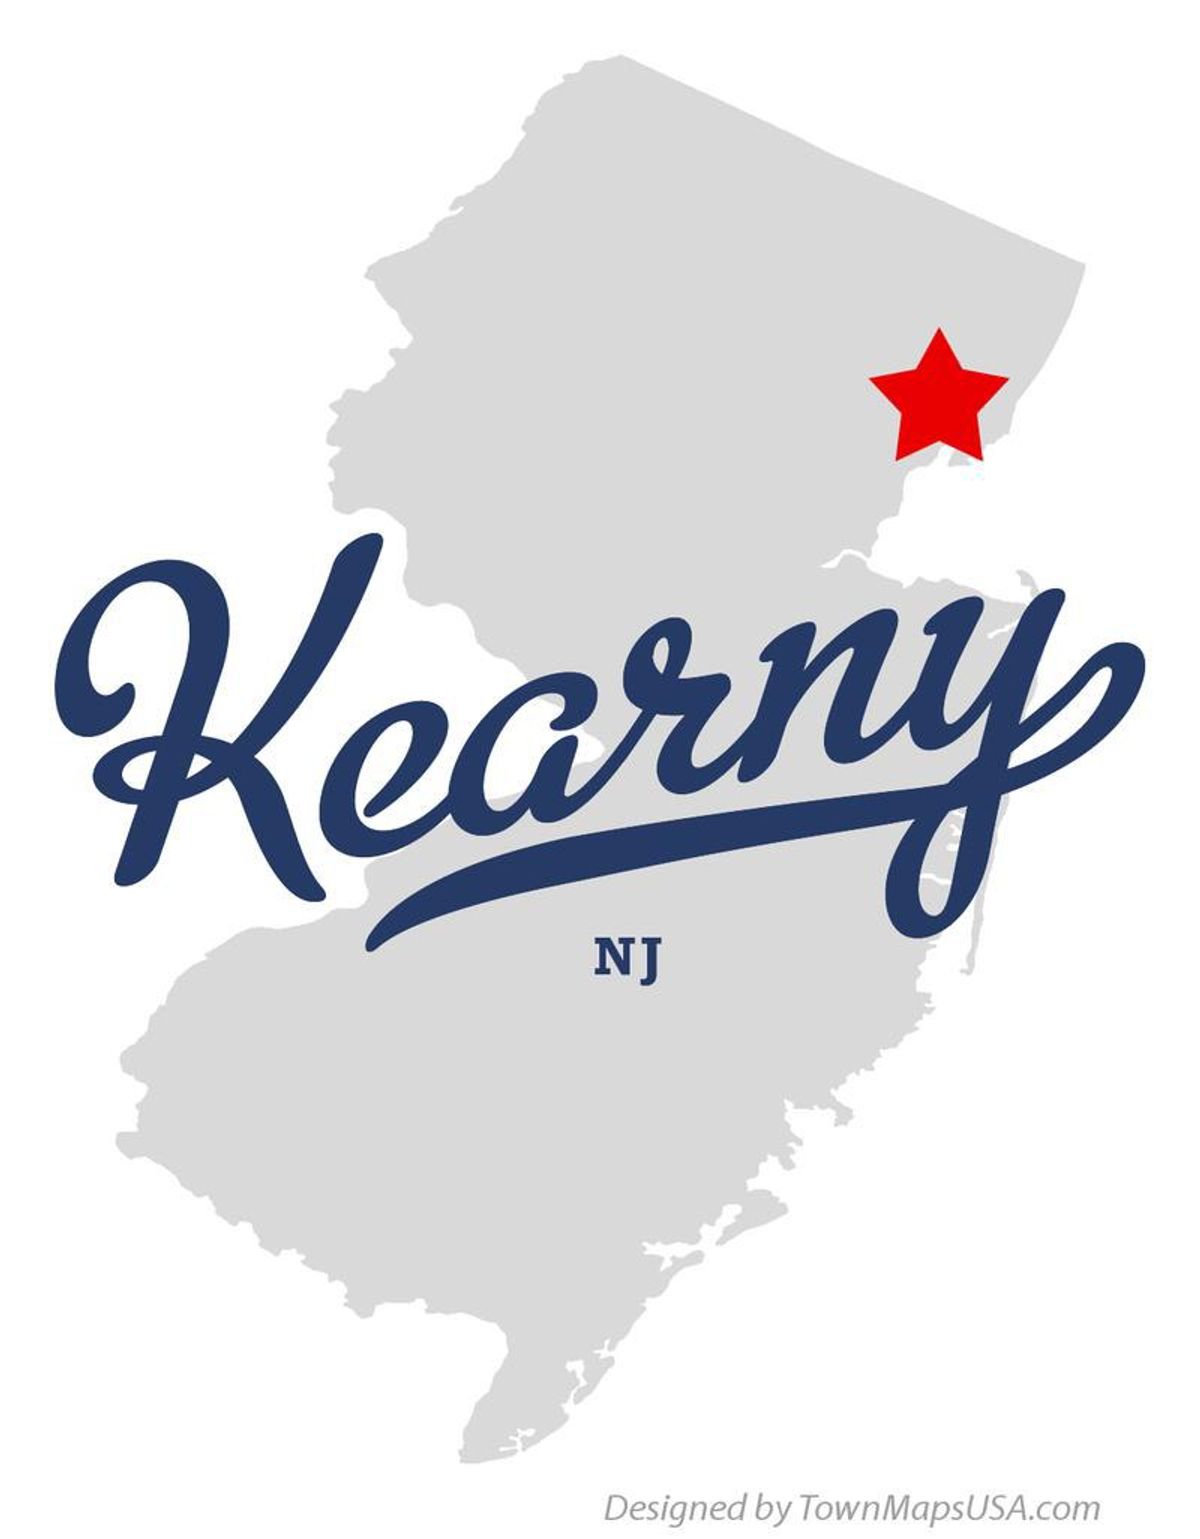 11 Signs You Grew Up In Kearny, NJ